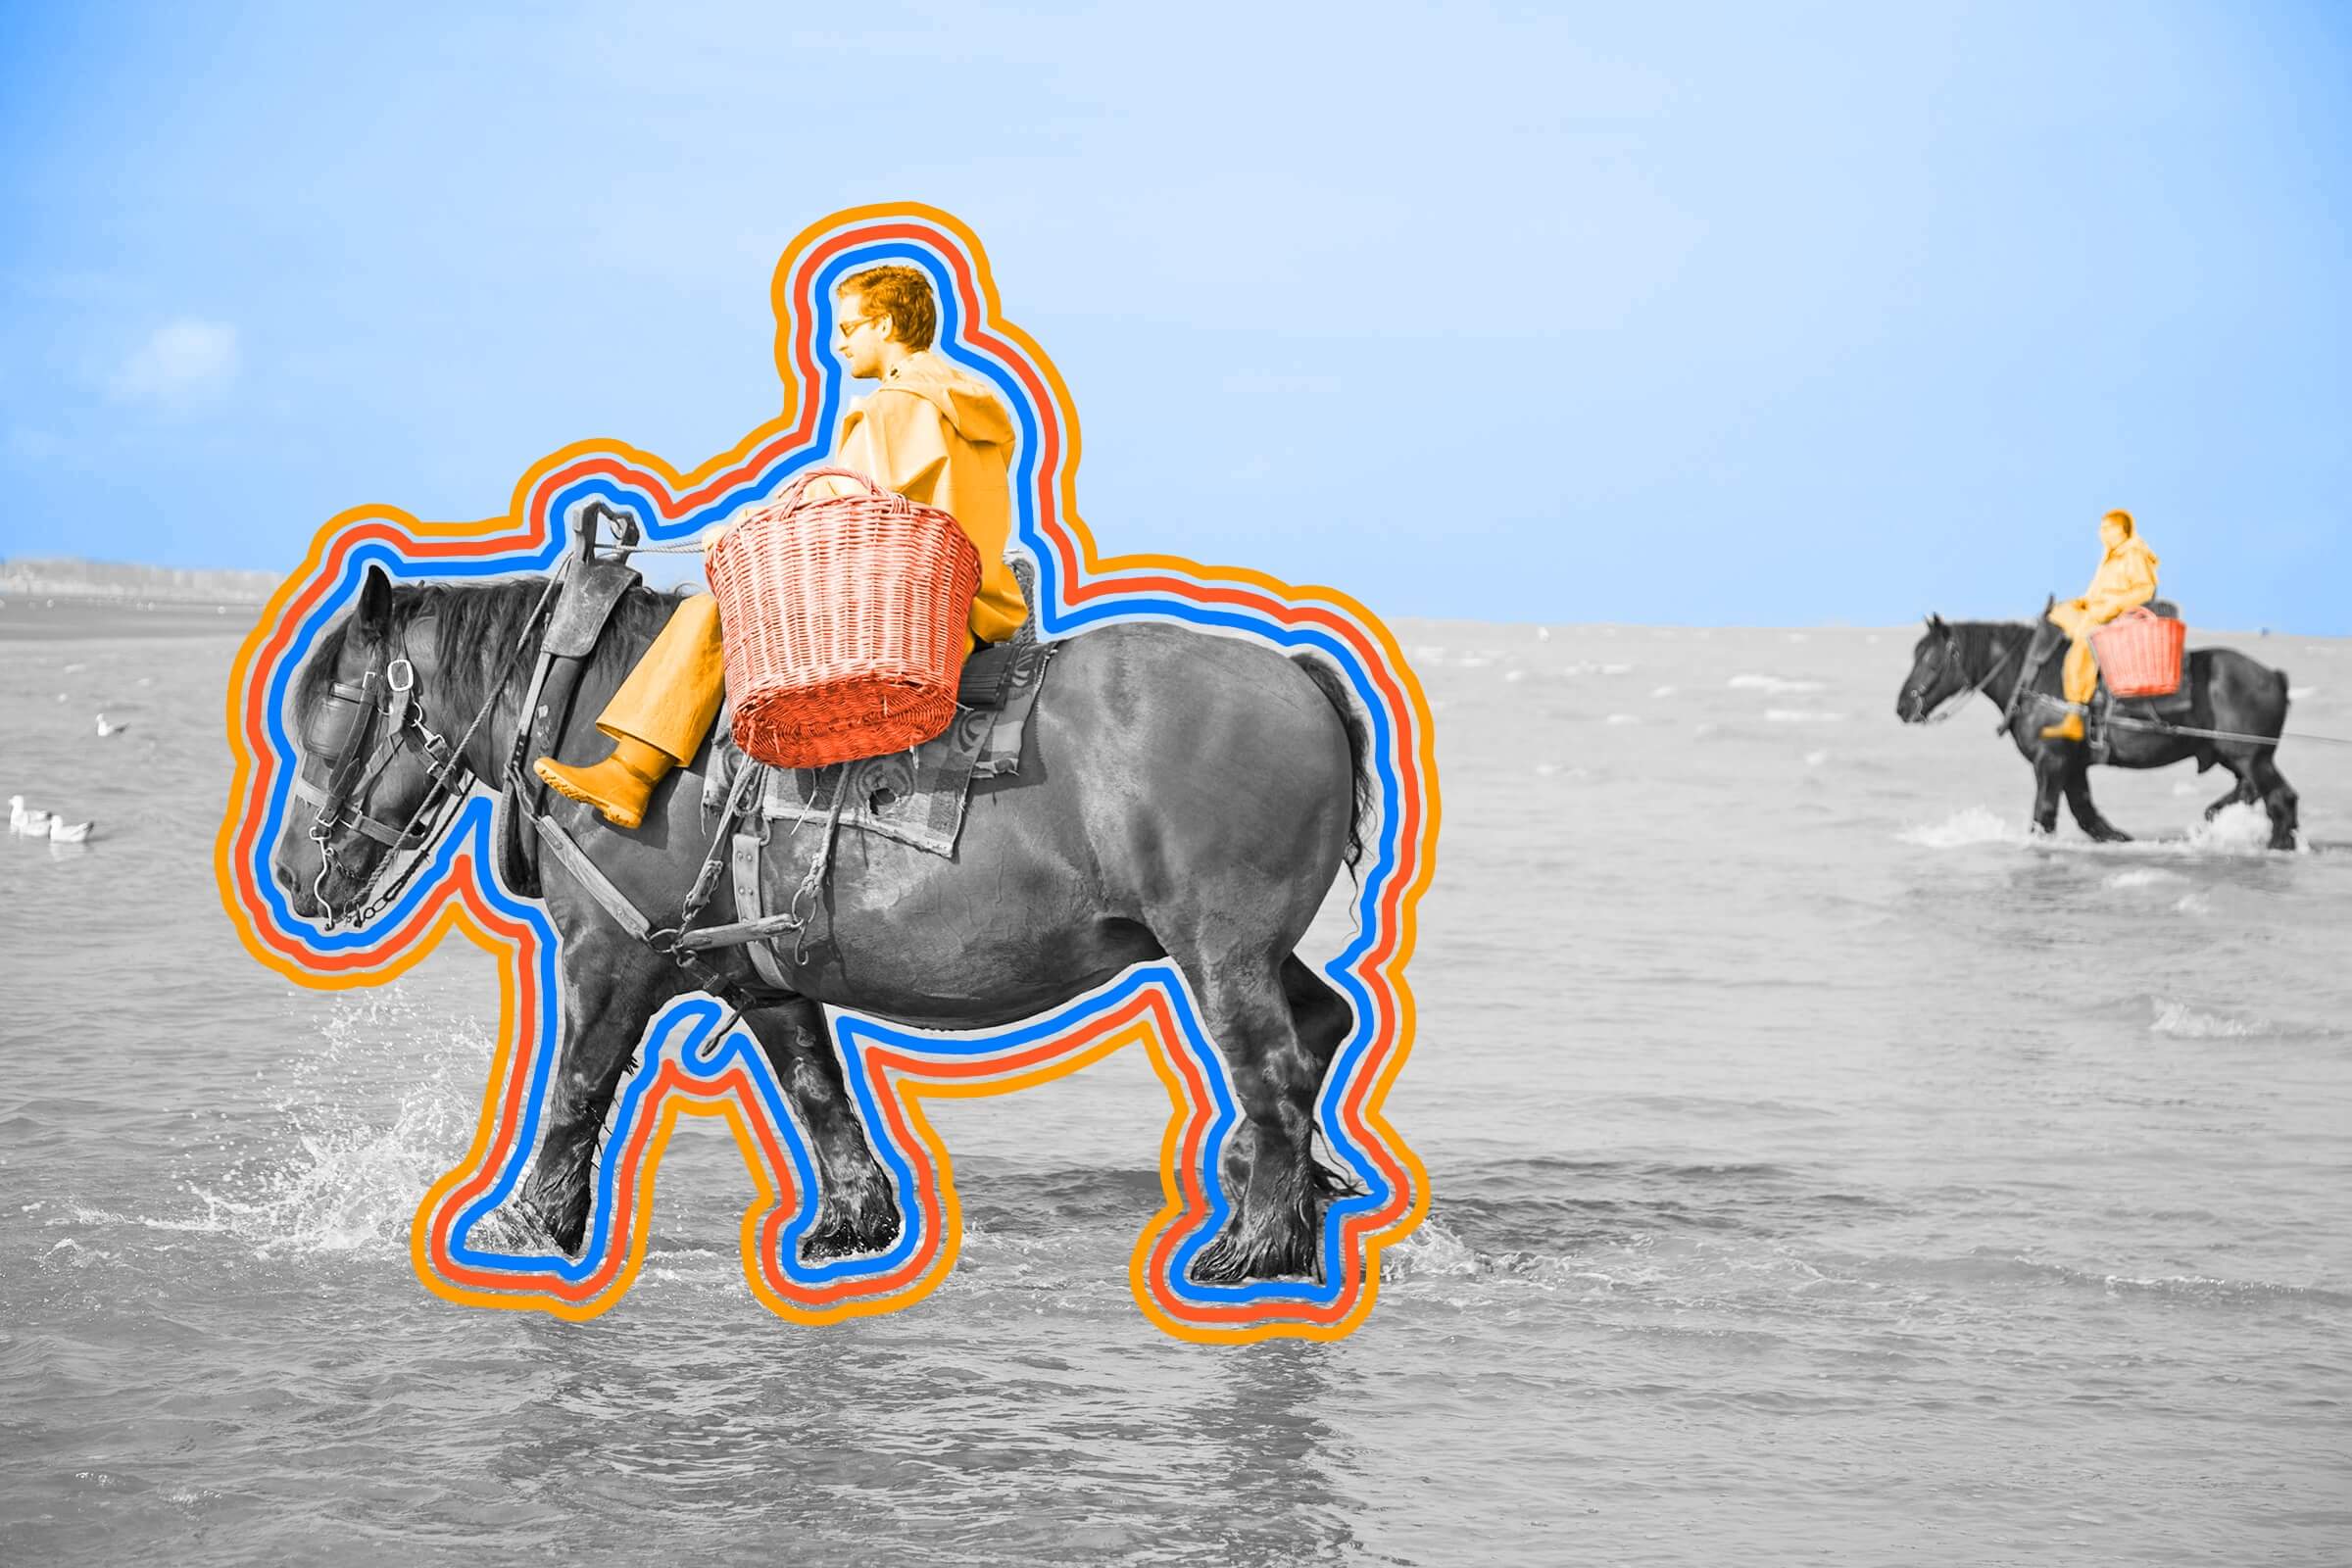 Belgium has a 500-year-old tradition of shrimp fishing on horseback.